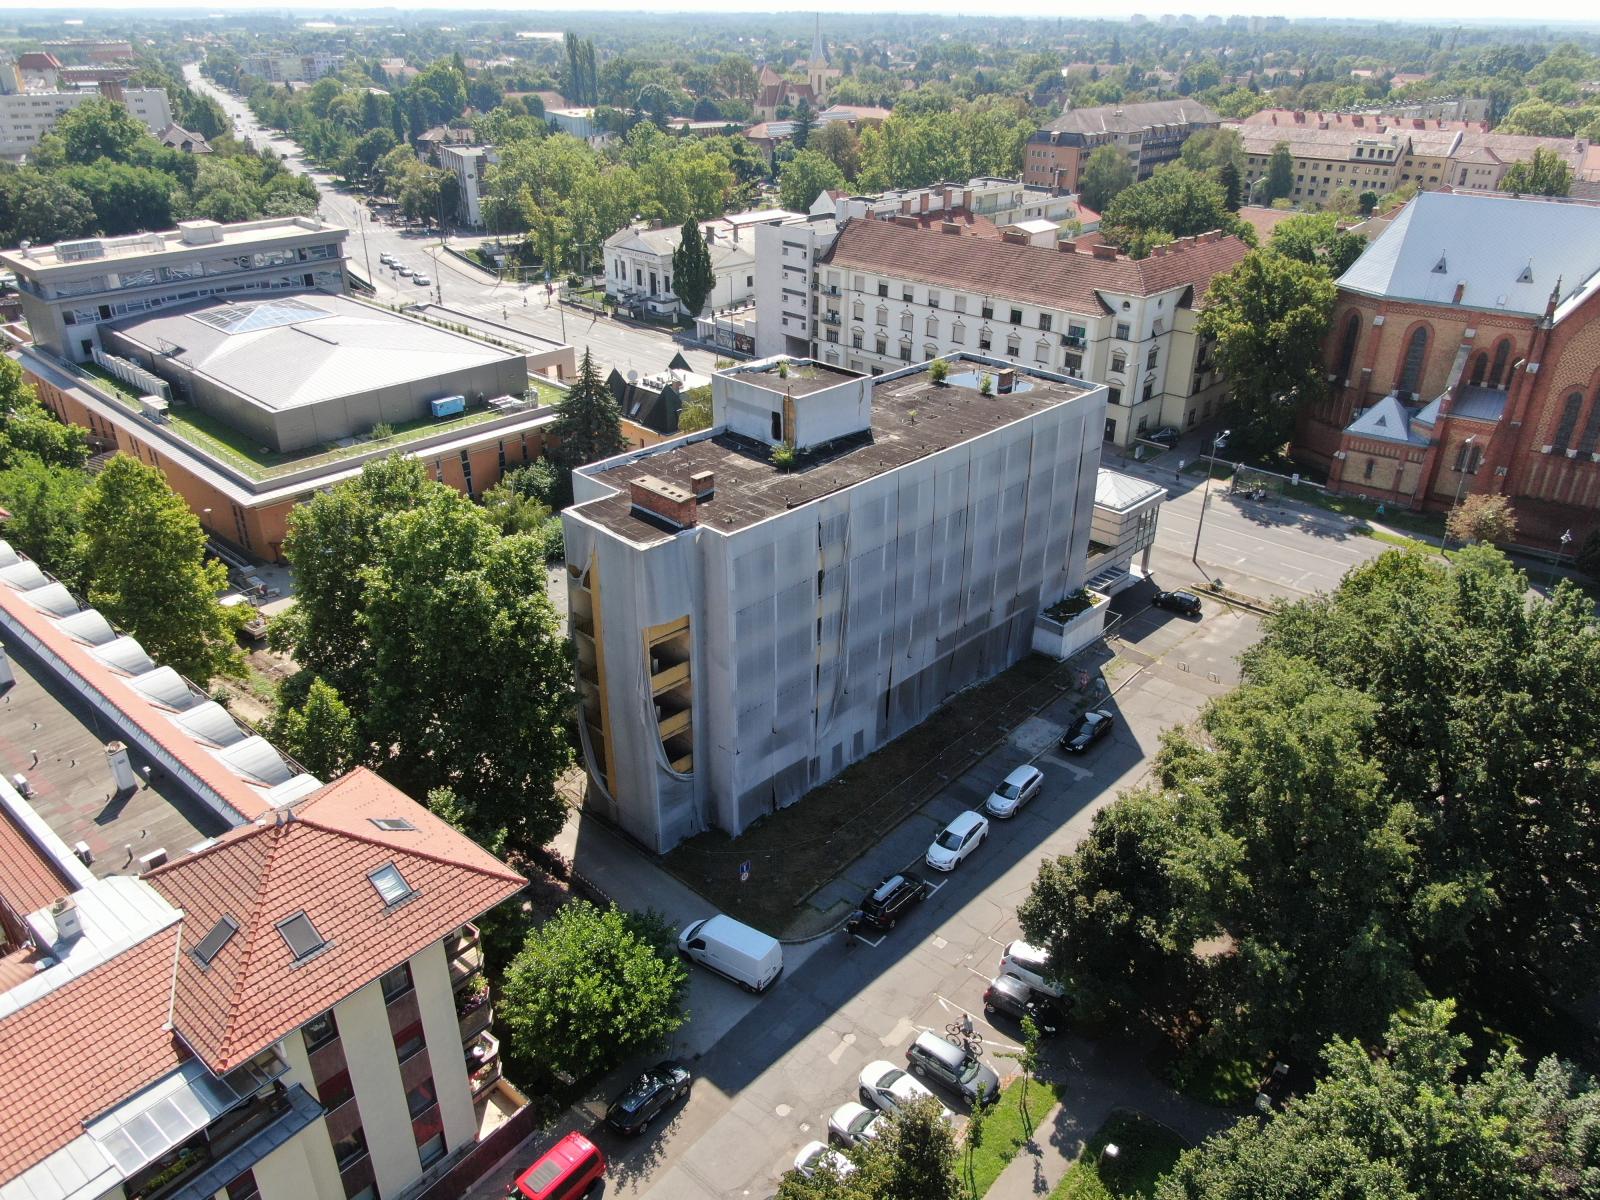 Drónfelvétel a Körös Hotelről 2020. július 29-én. Fotó: behir.hu